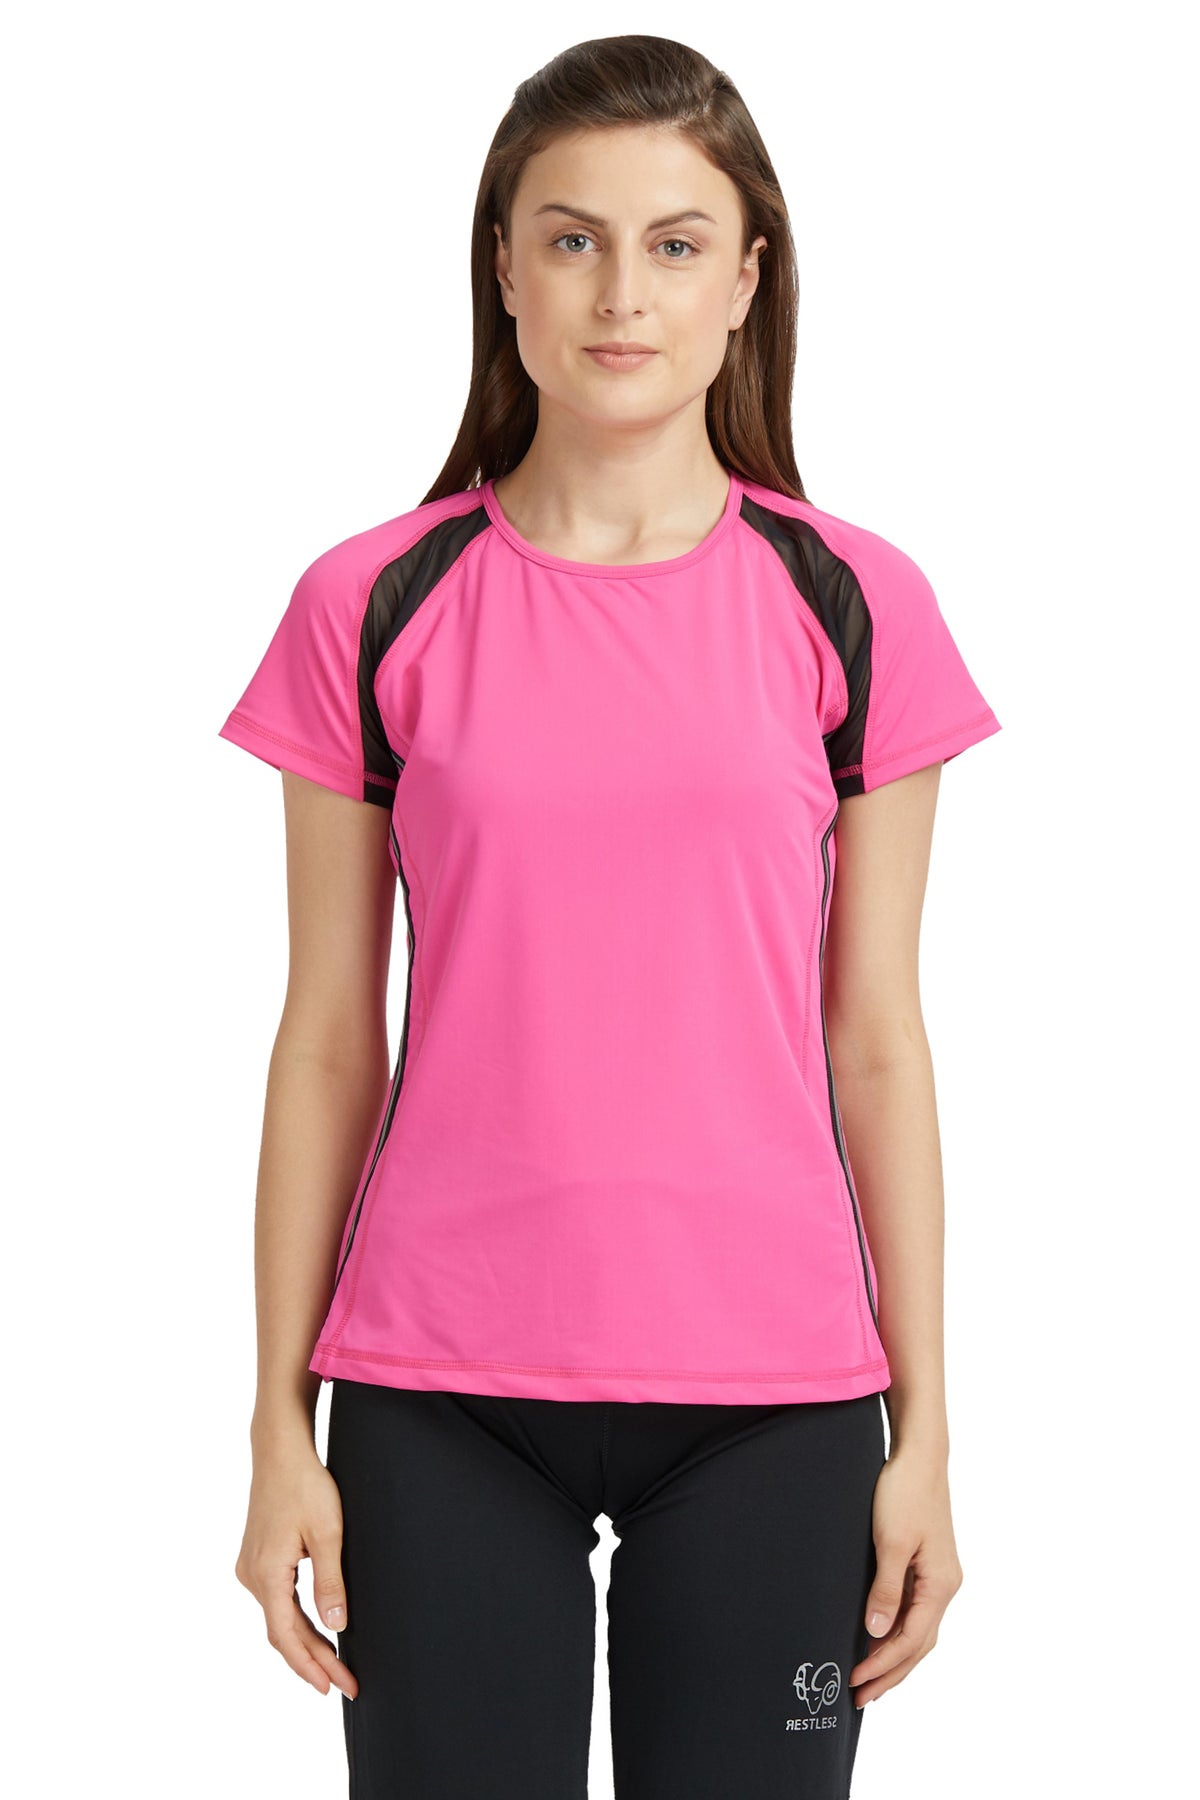 Tuna London Pink Poly Blend Round Neck Women’s T-Shirt